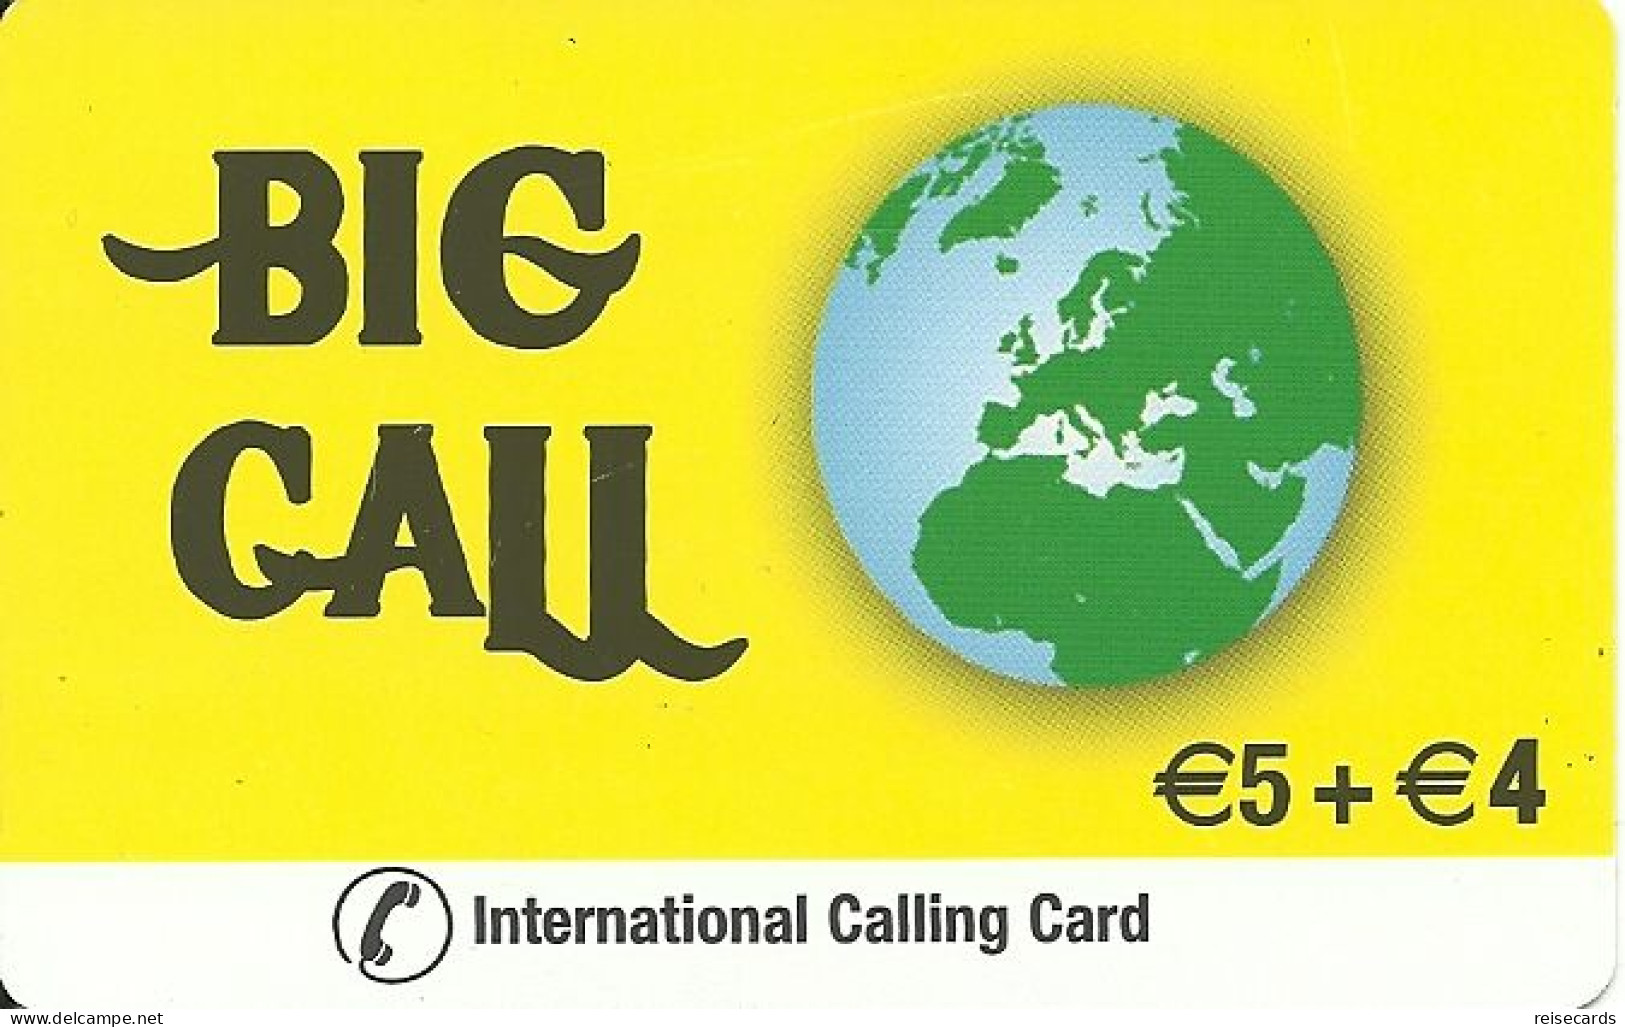 Germany: Prepaid IDT Big Call 01.11 - Cellulari, Carte Prepagate E Ricariche